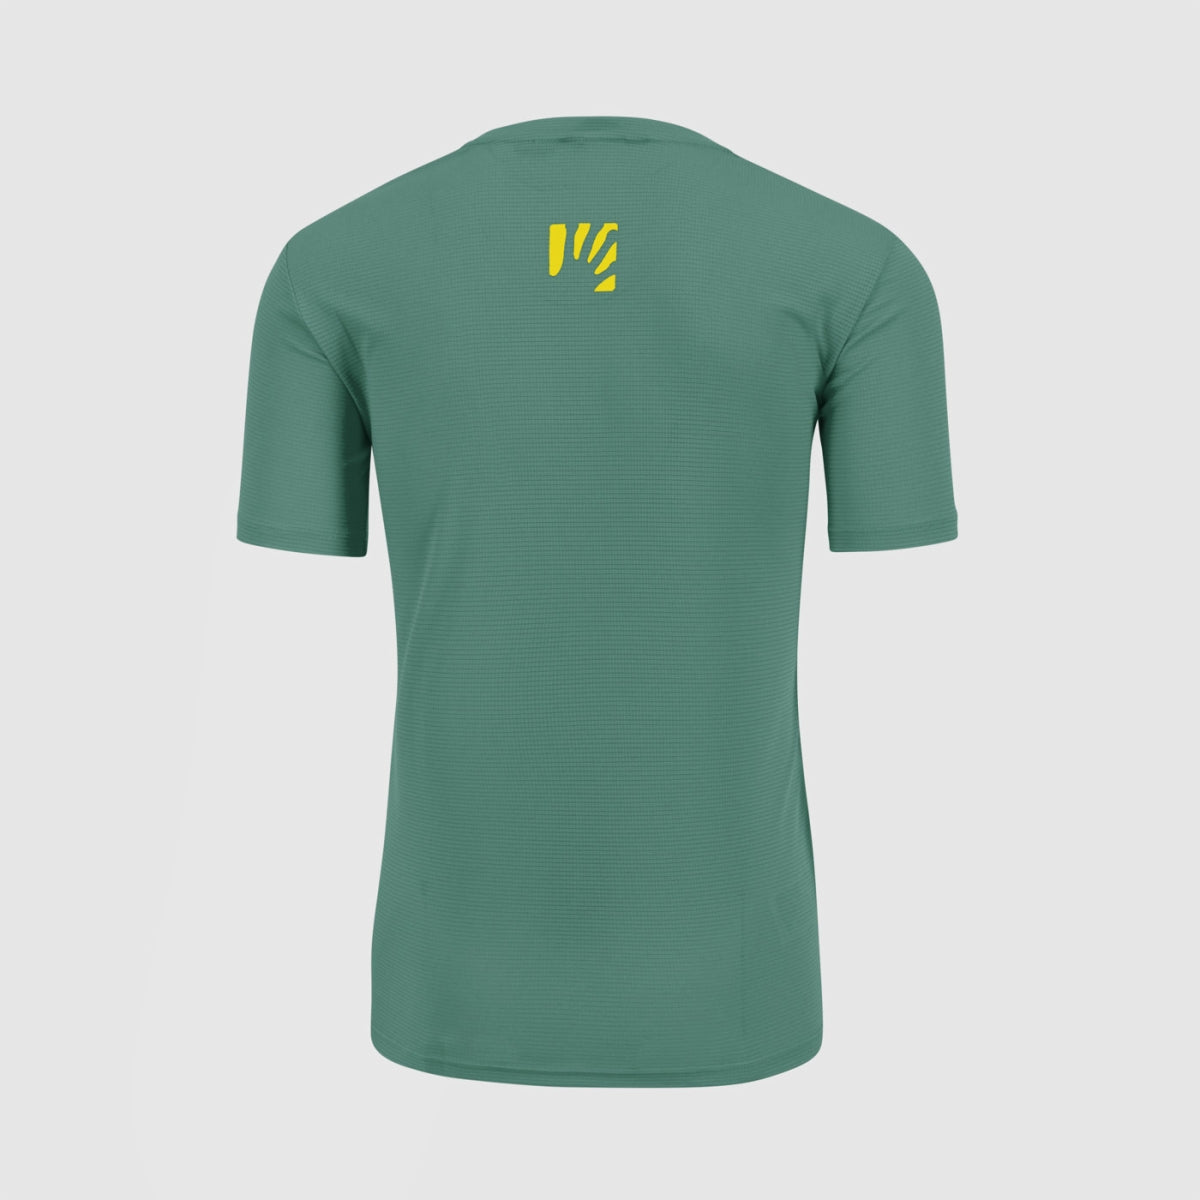 Green Loma jersey t-shirt